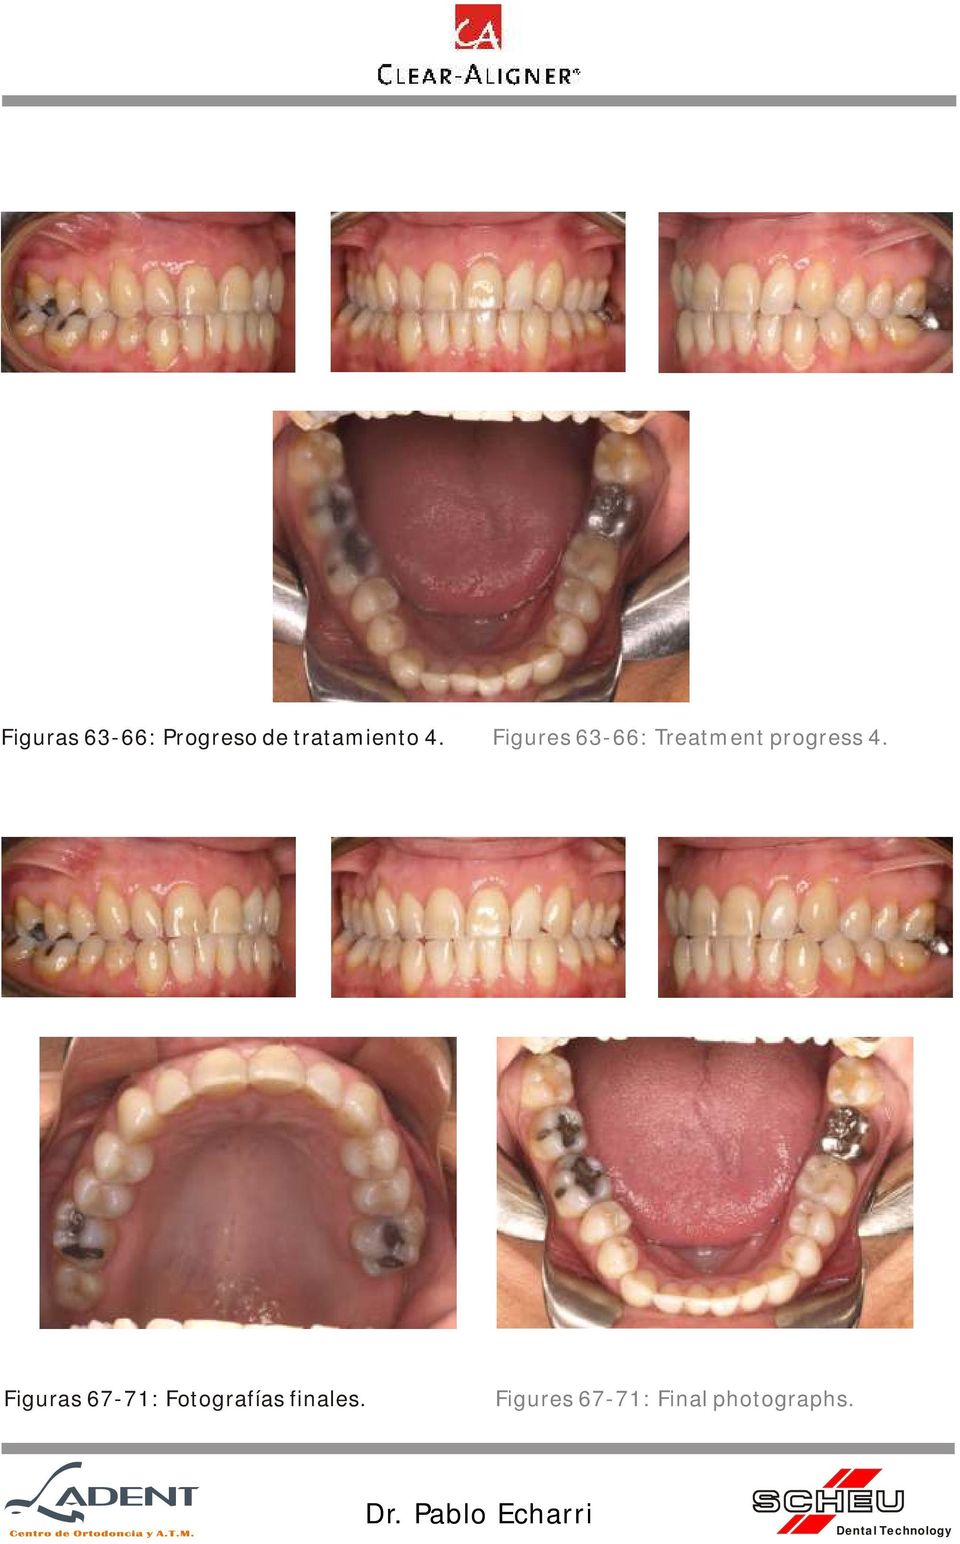 Figures 63-66: Treatment progress 4.